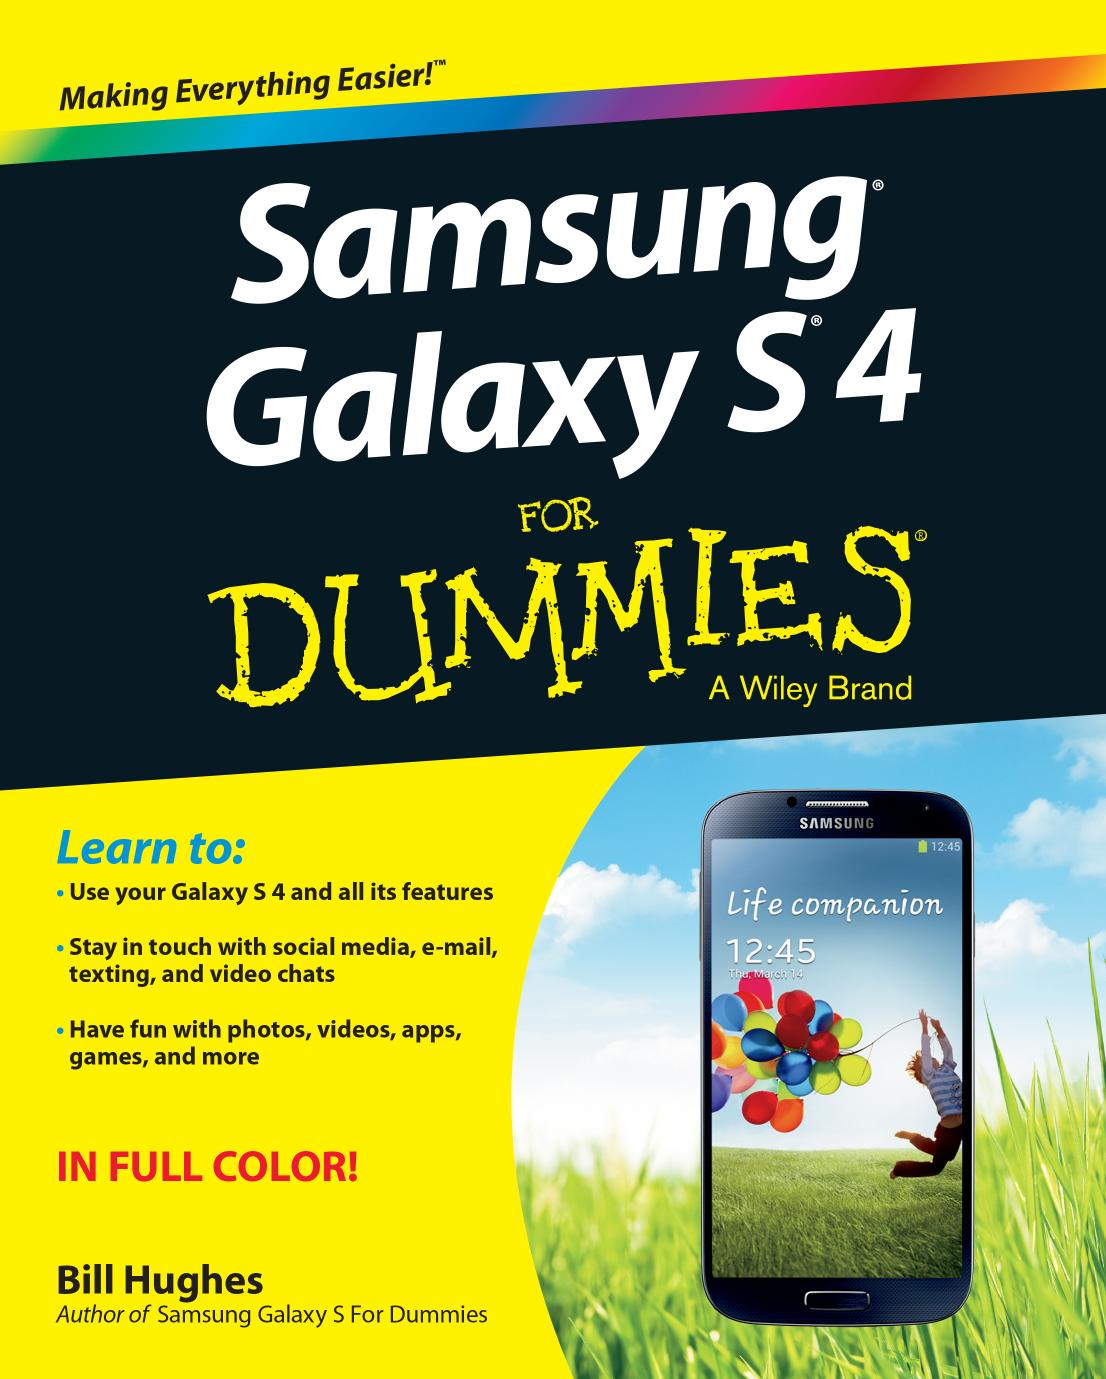 Samsung Galaxy S 4 For Dummies by Bill Hughes